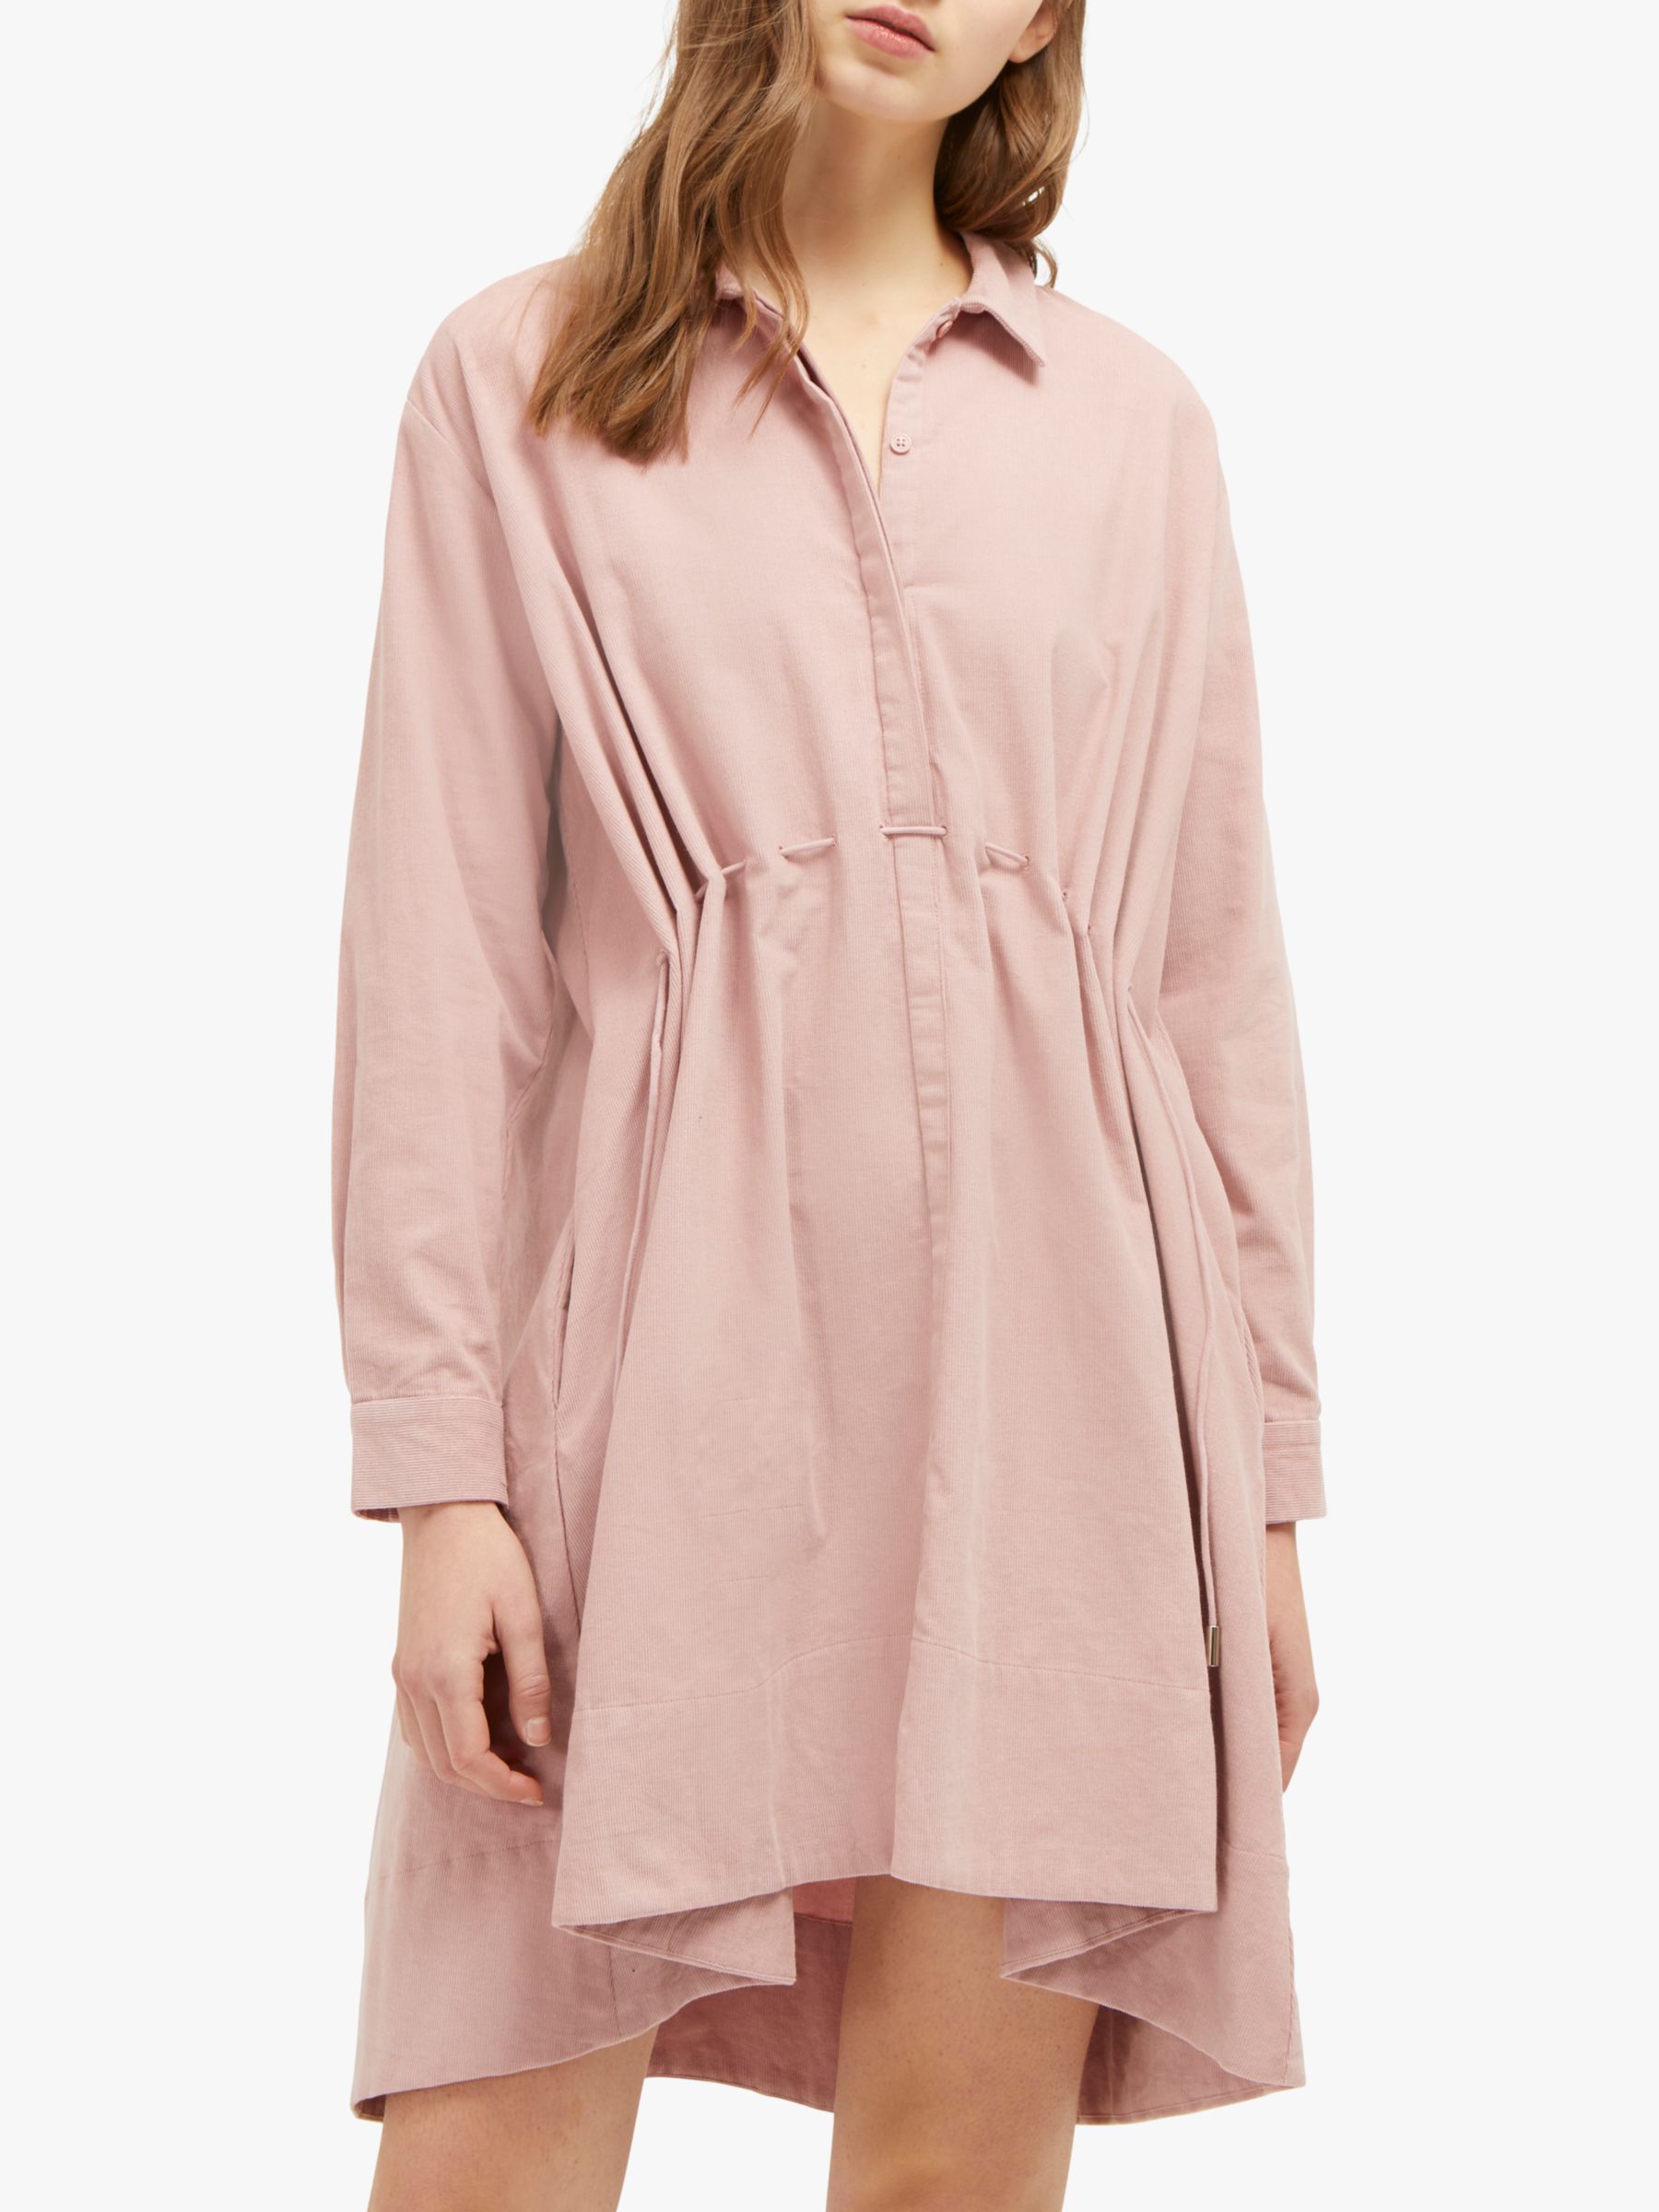 French Connection Smythson Shirt Dress, TeaDress Pink